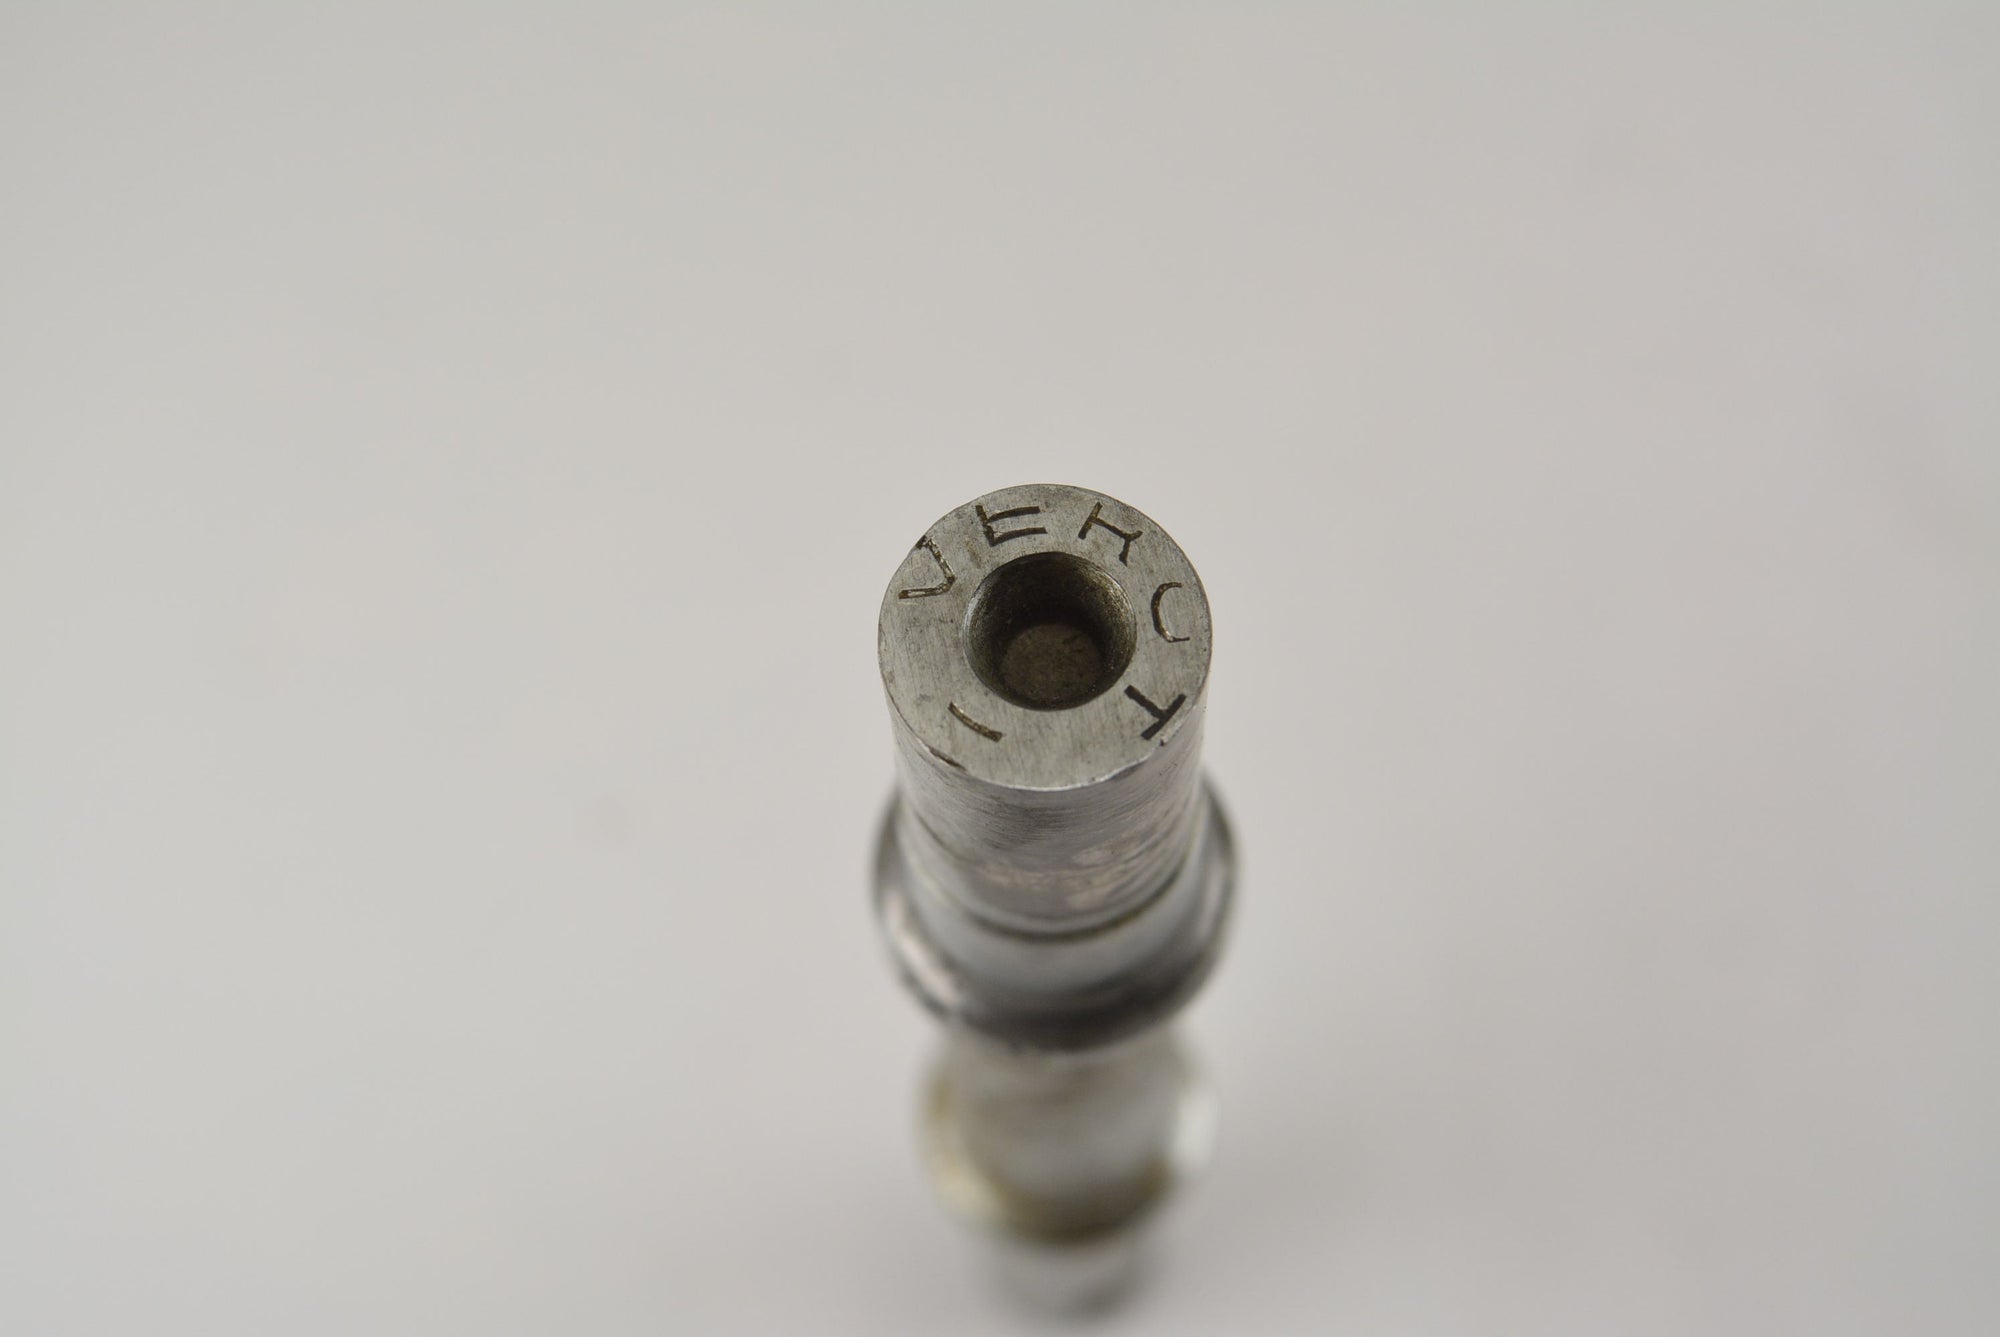 Verot Kurbelgarnitur 52 – 45 Zähne 170 mm mit Verot Keillager